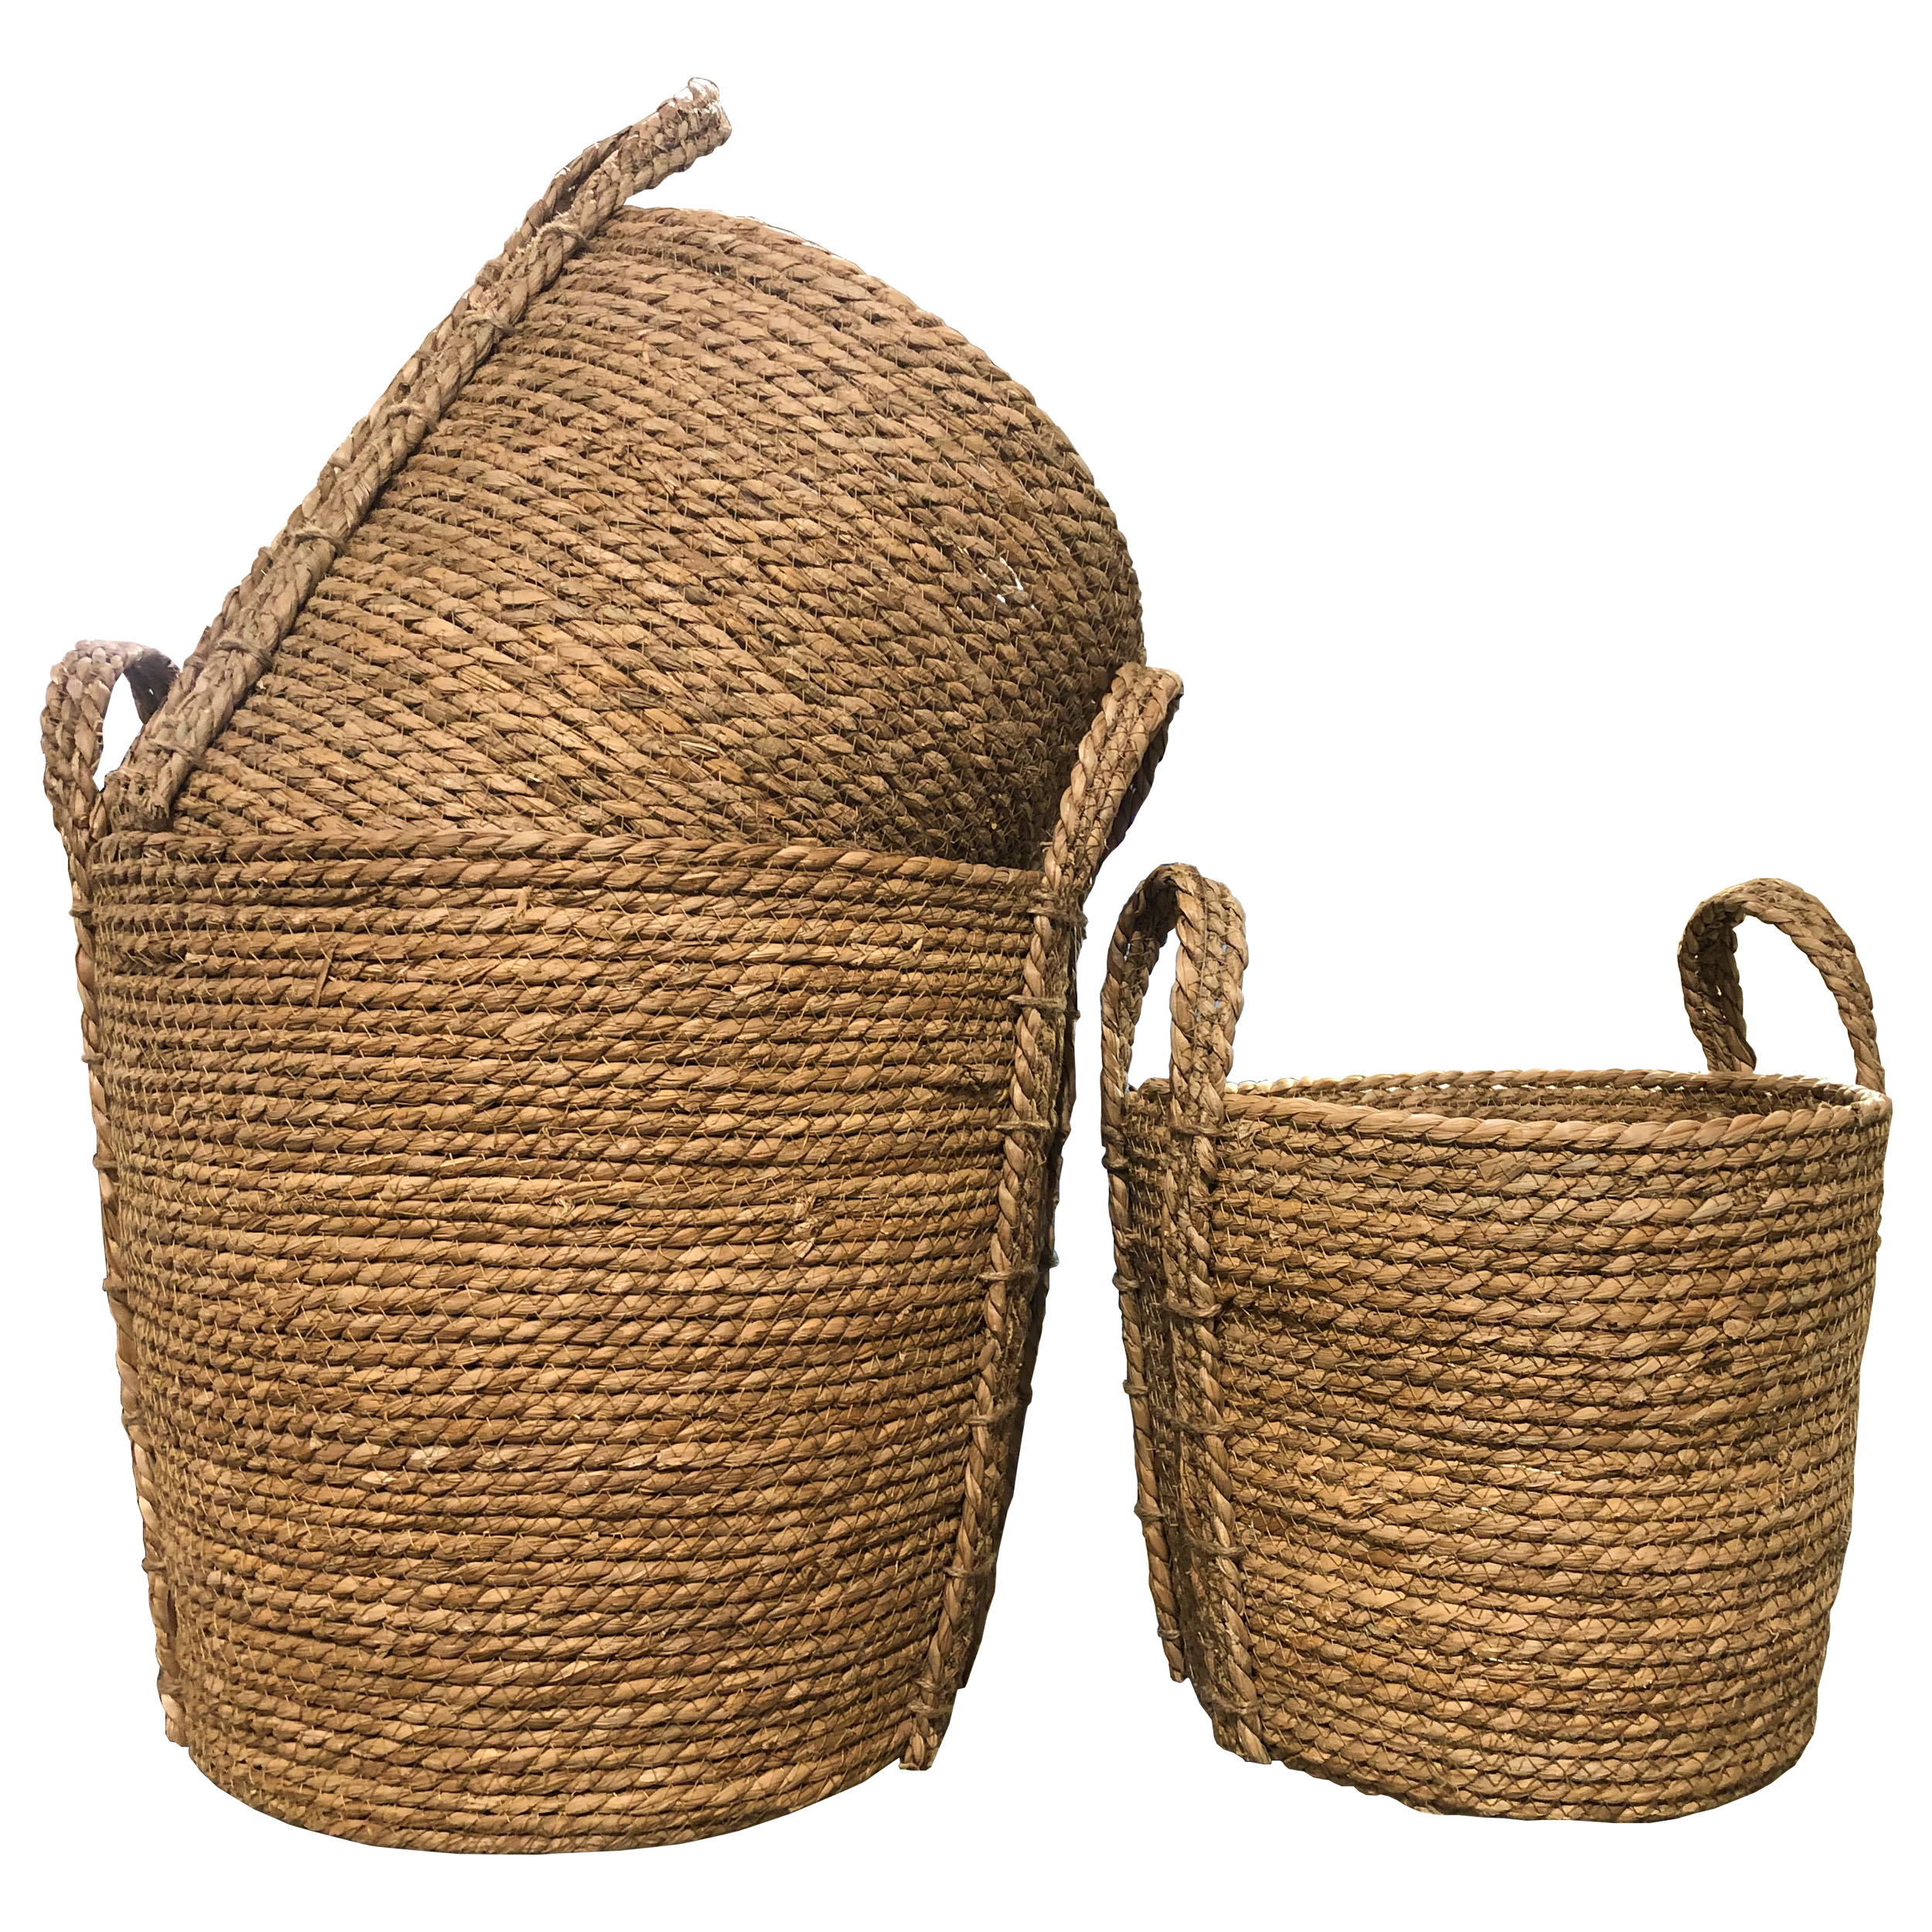 Baskets Safi - Set of Three